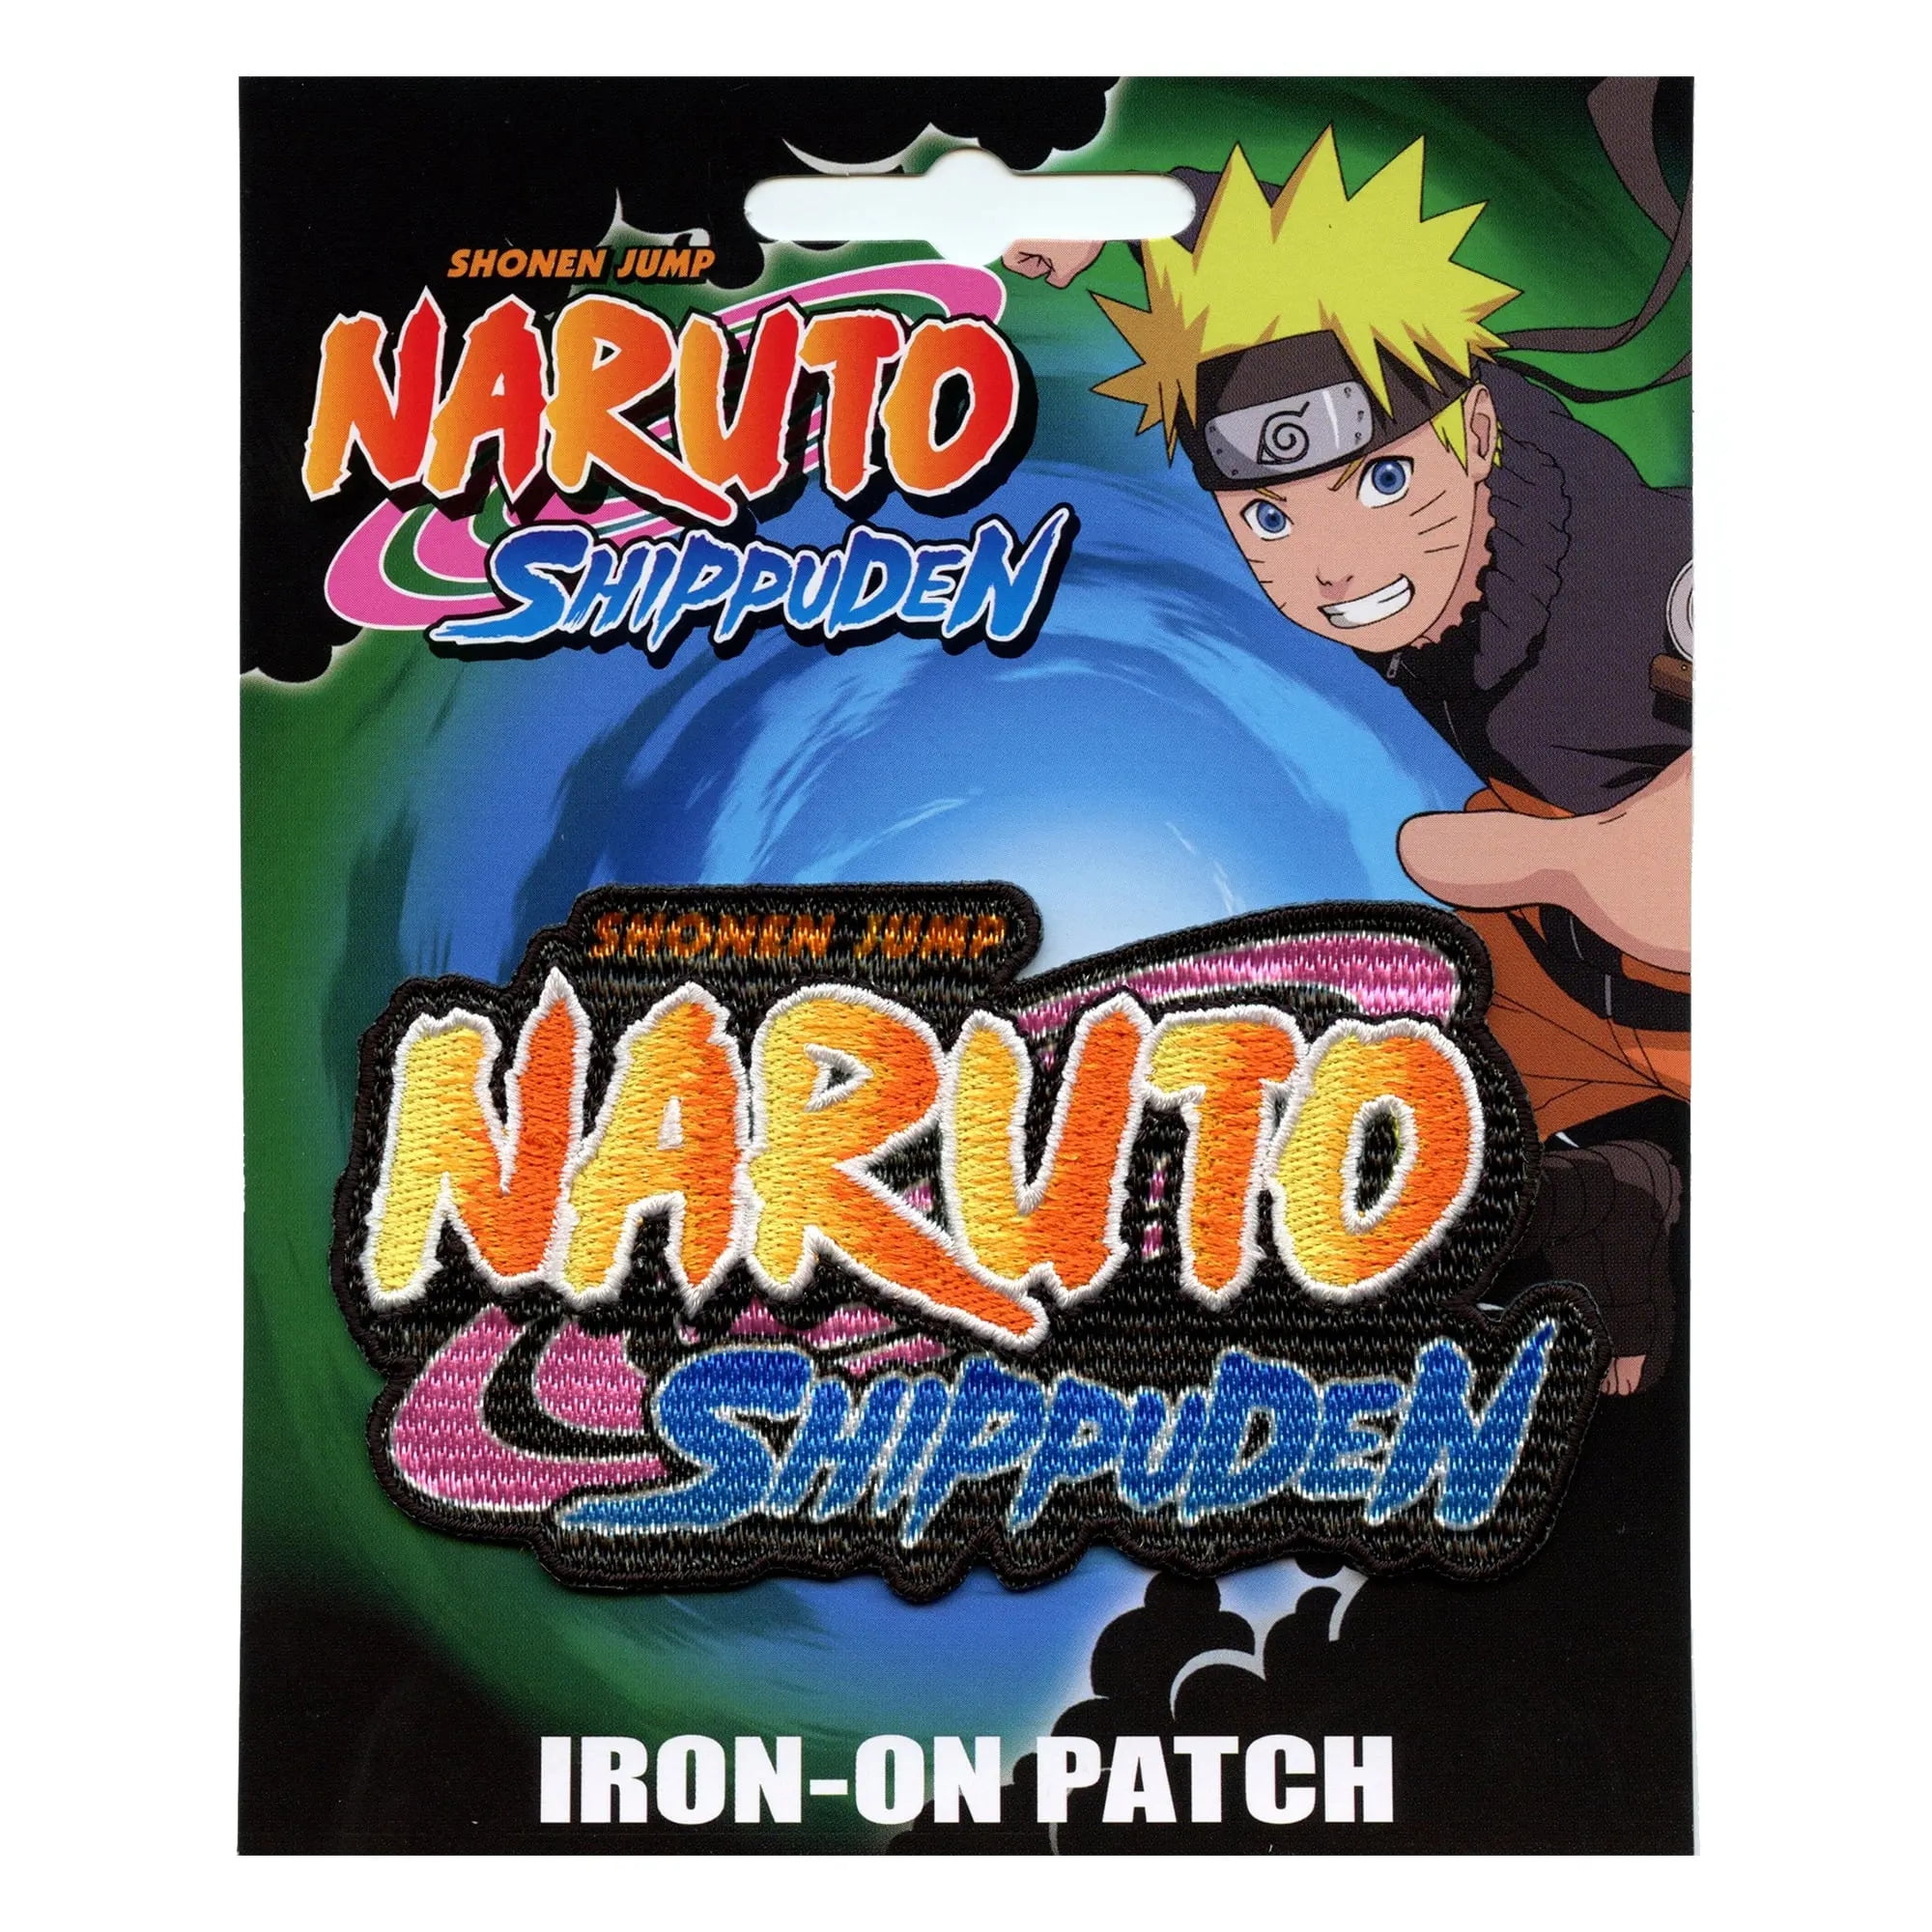 Naruto Sharingan Logo Patch (3 Inch) Iron/Sew-on Badge Anime TV